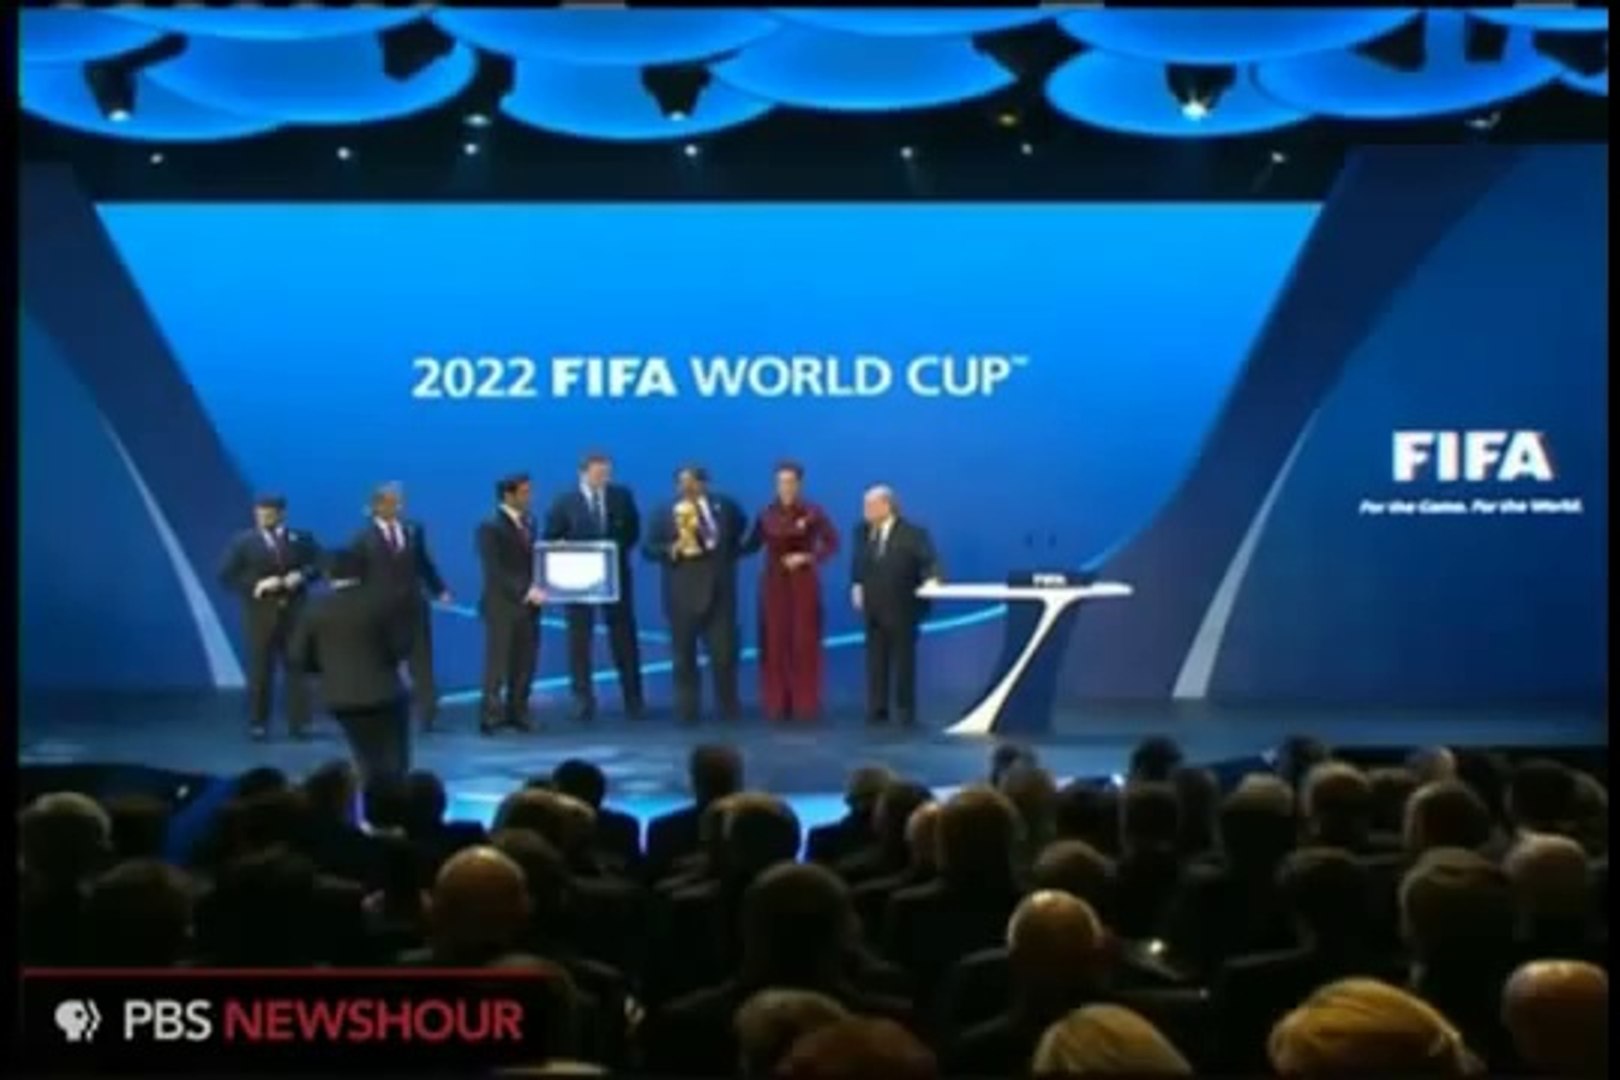 Qatar won 2022 Fifa World Cup bid